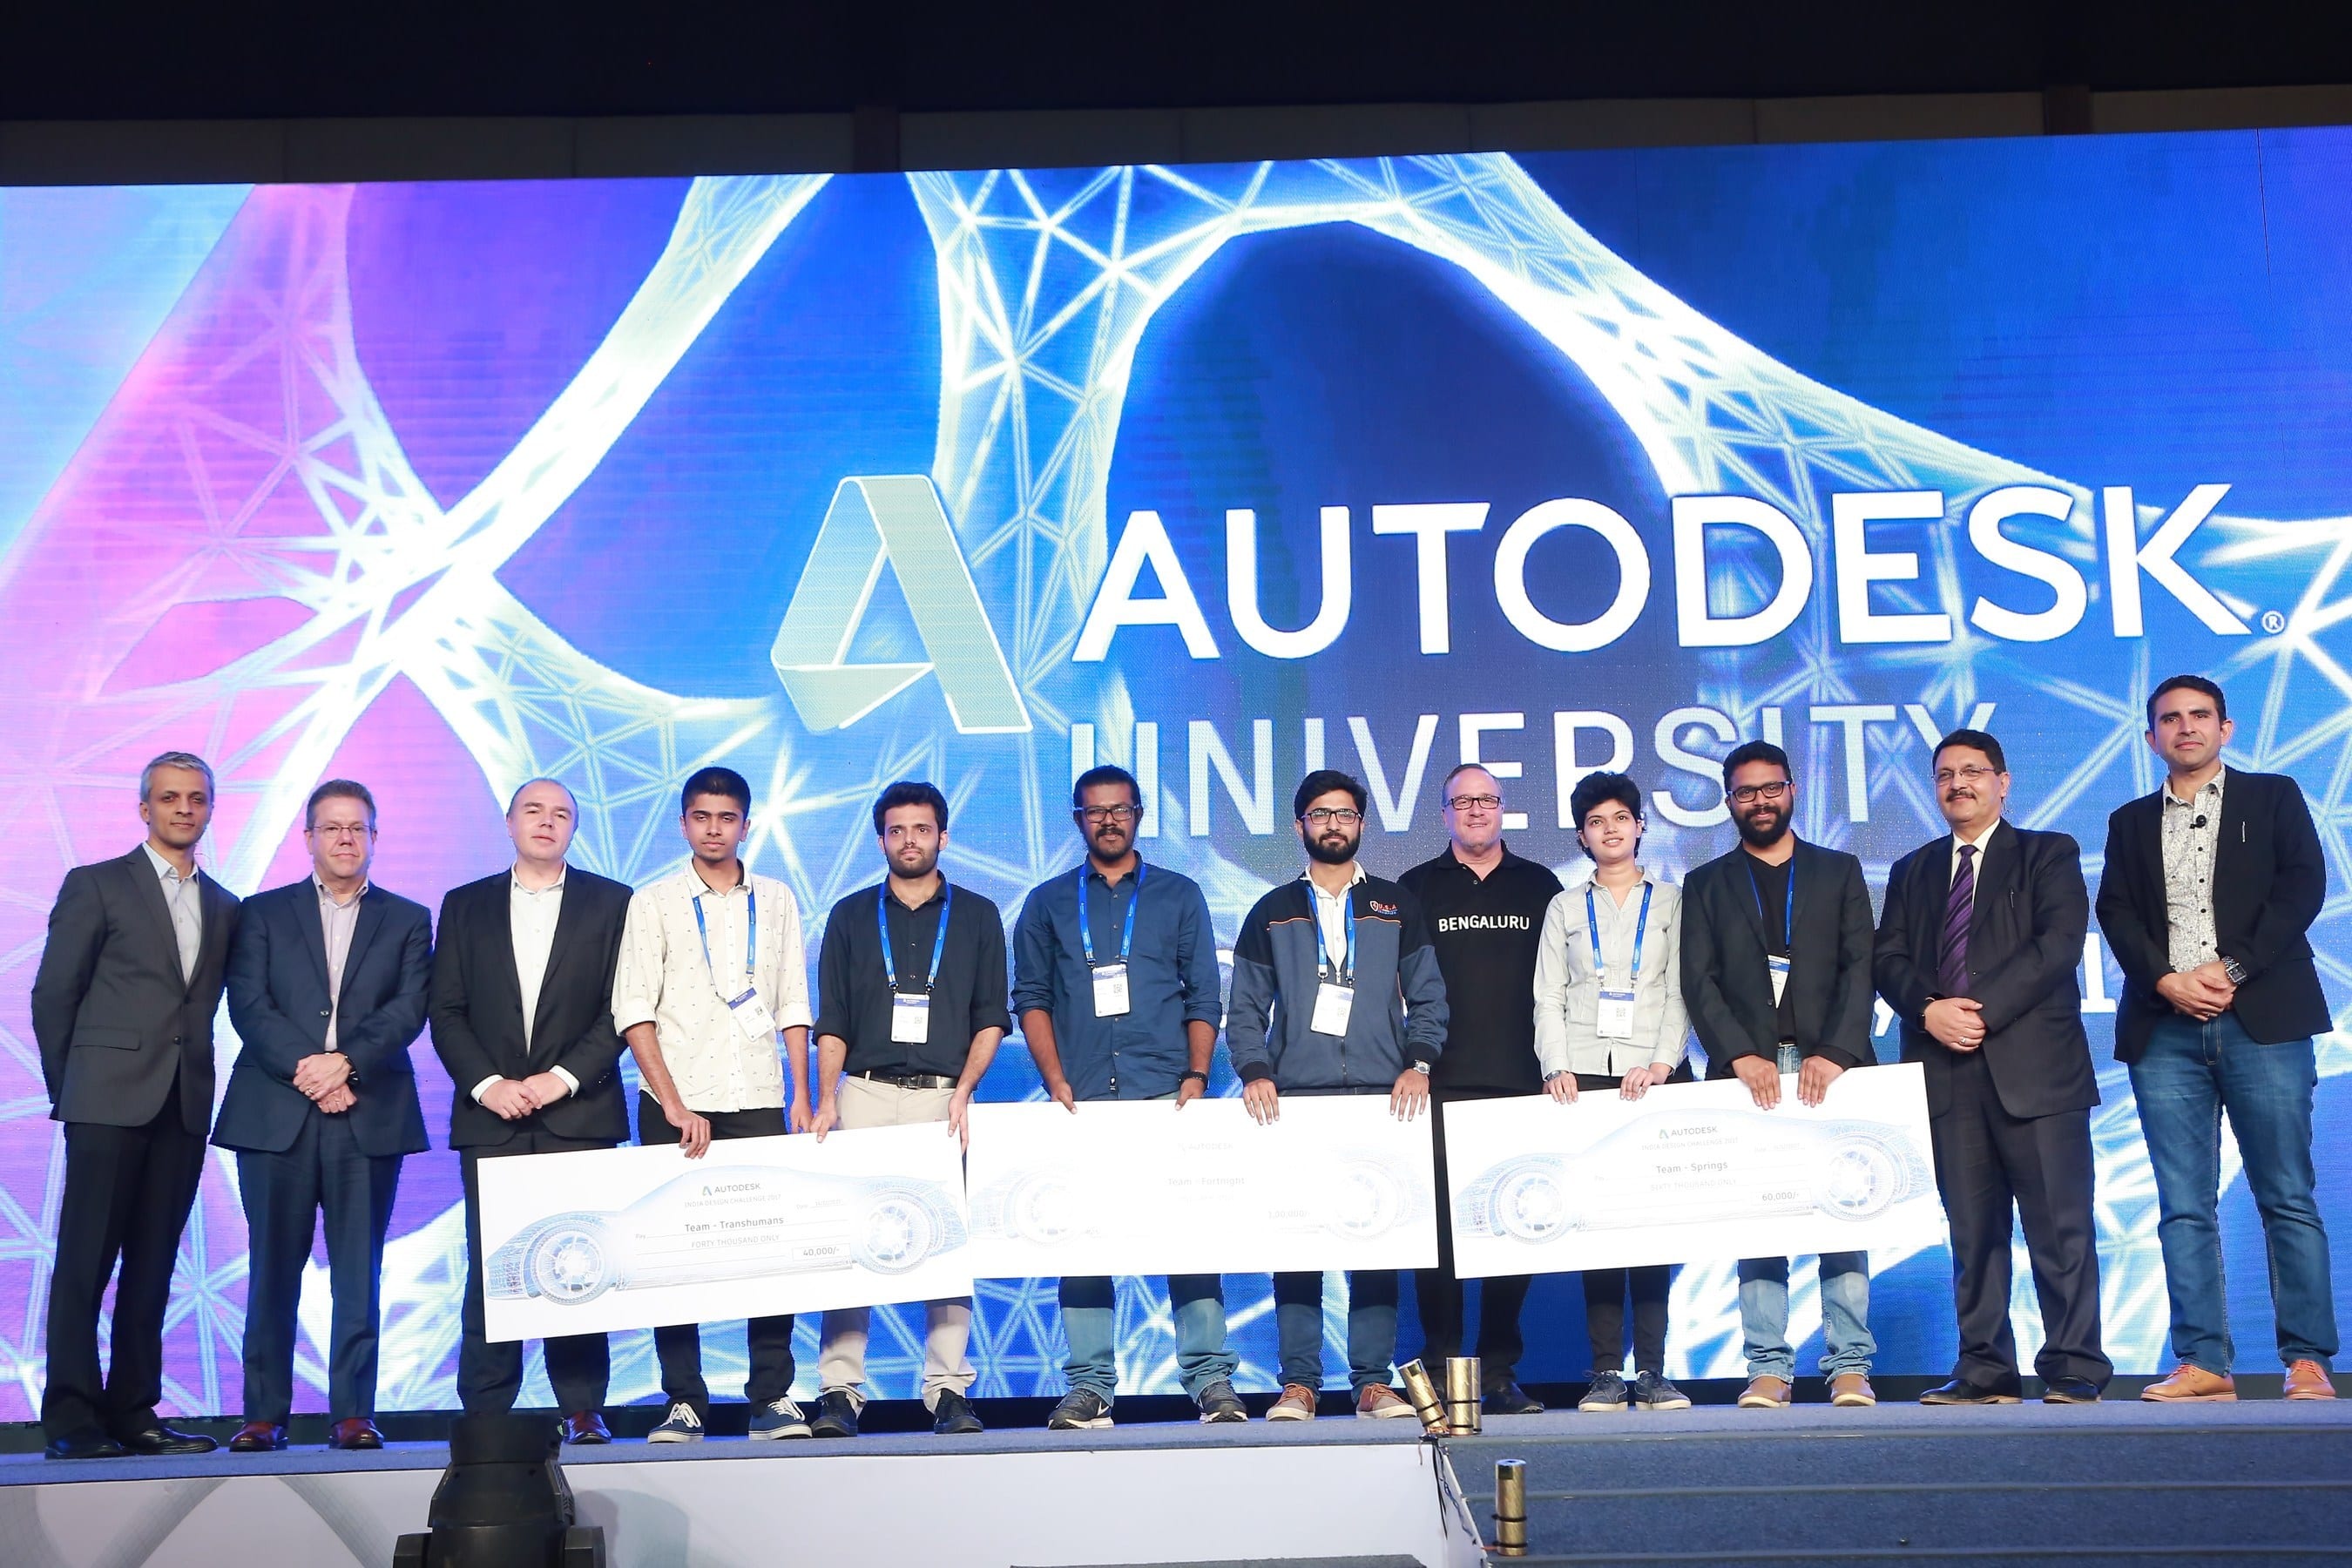 Winners of India Design Challenge announced at Autodesk University, Bengaluru 2017